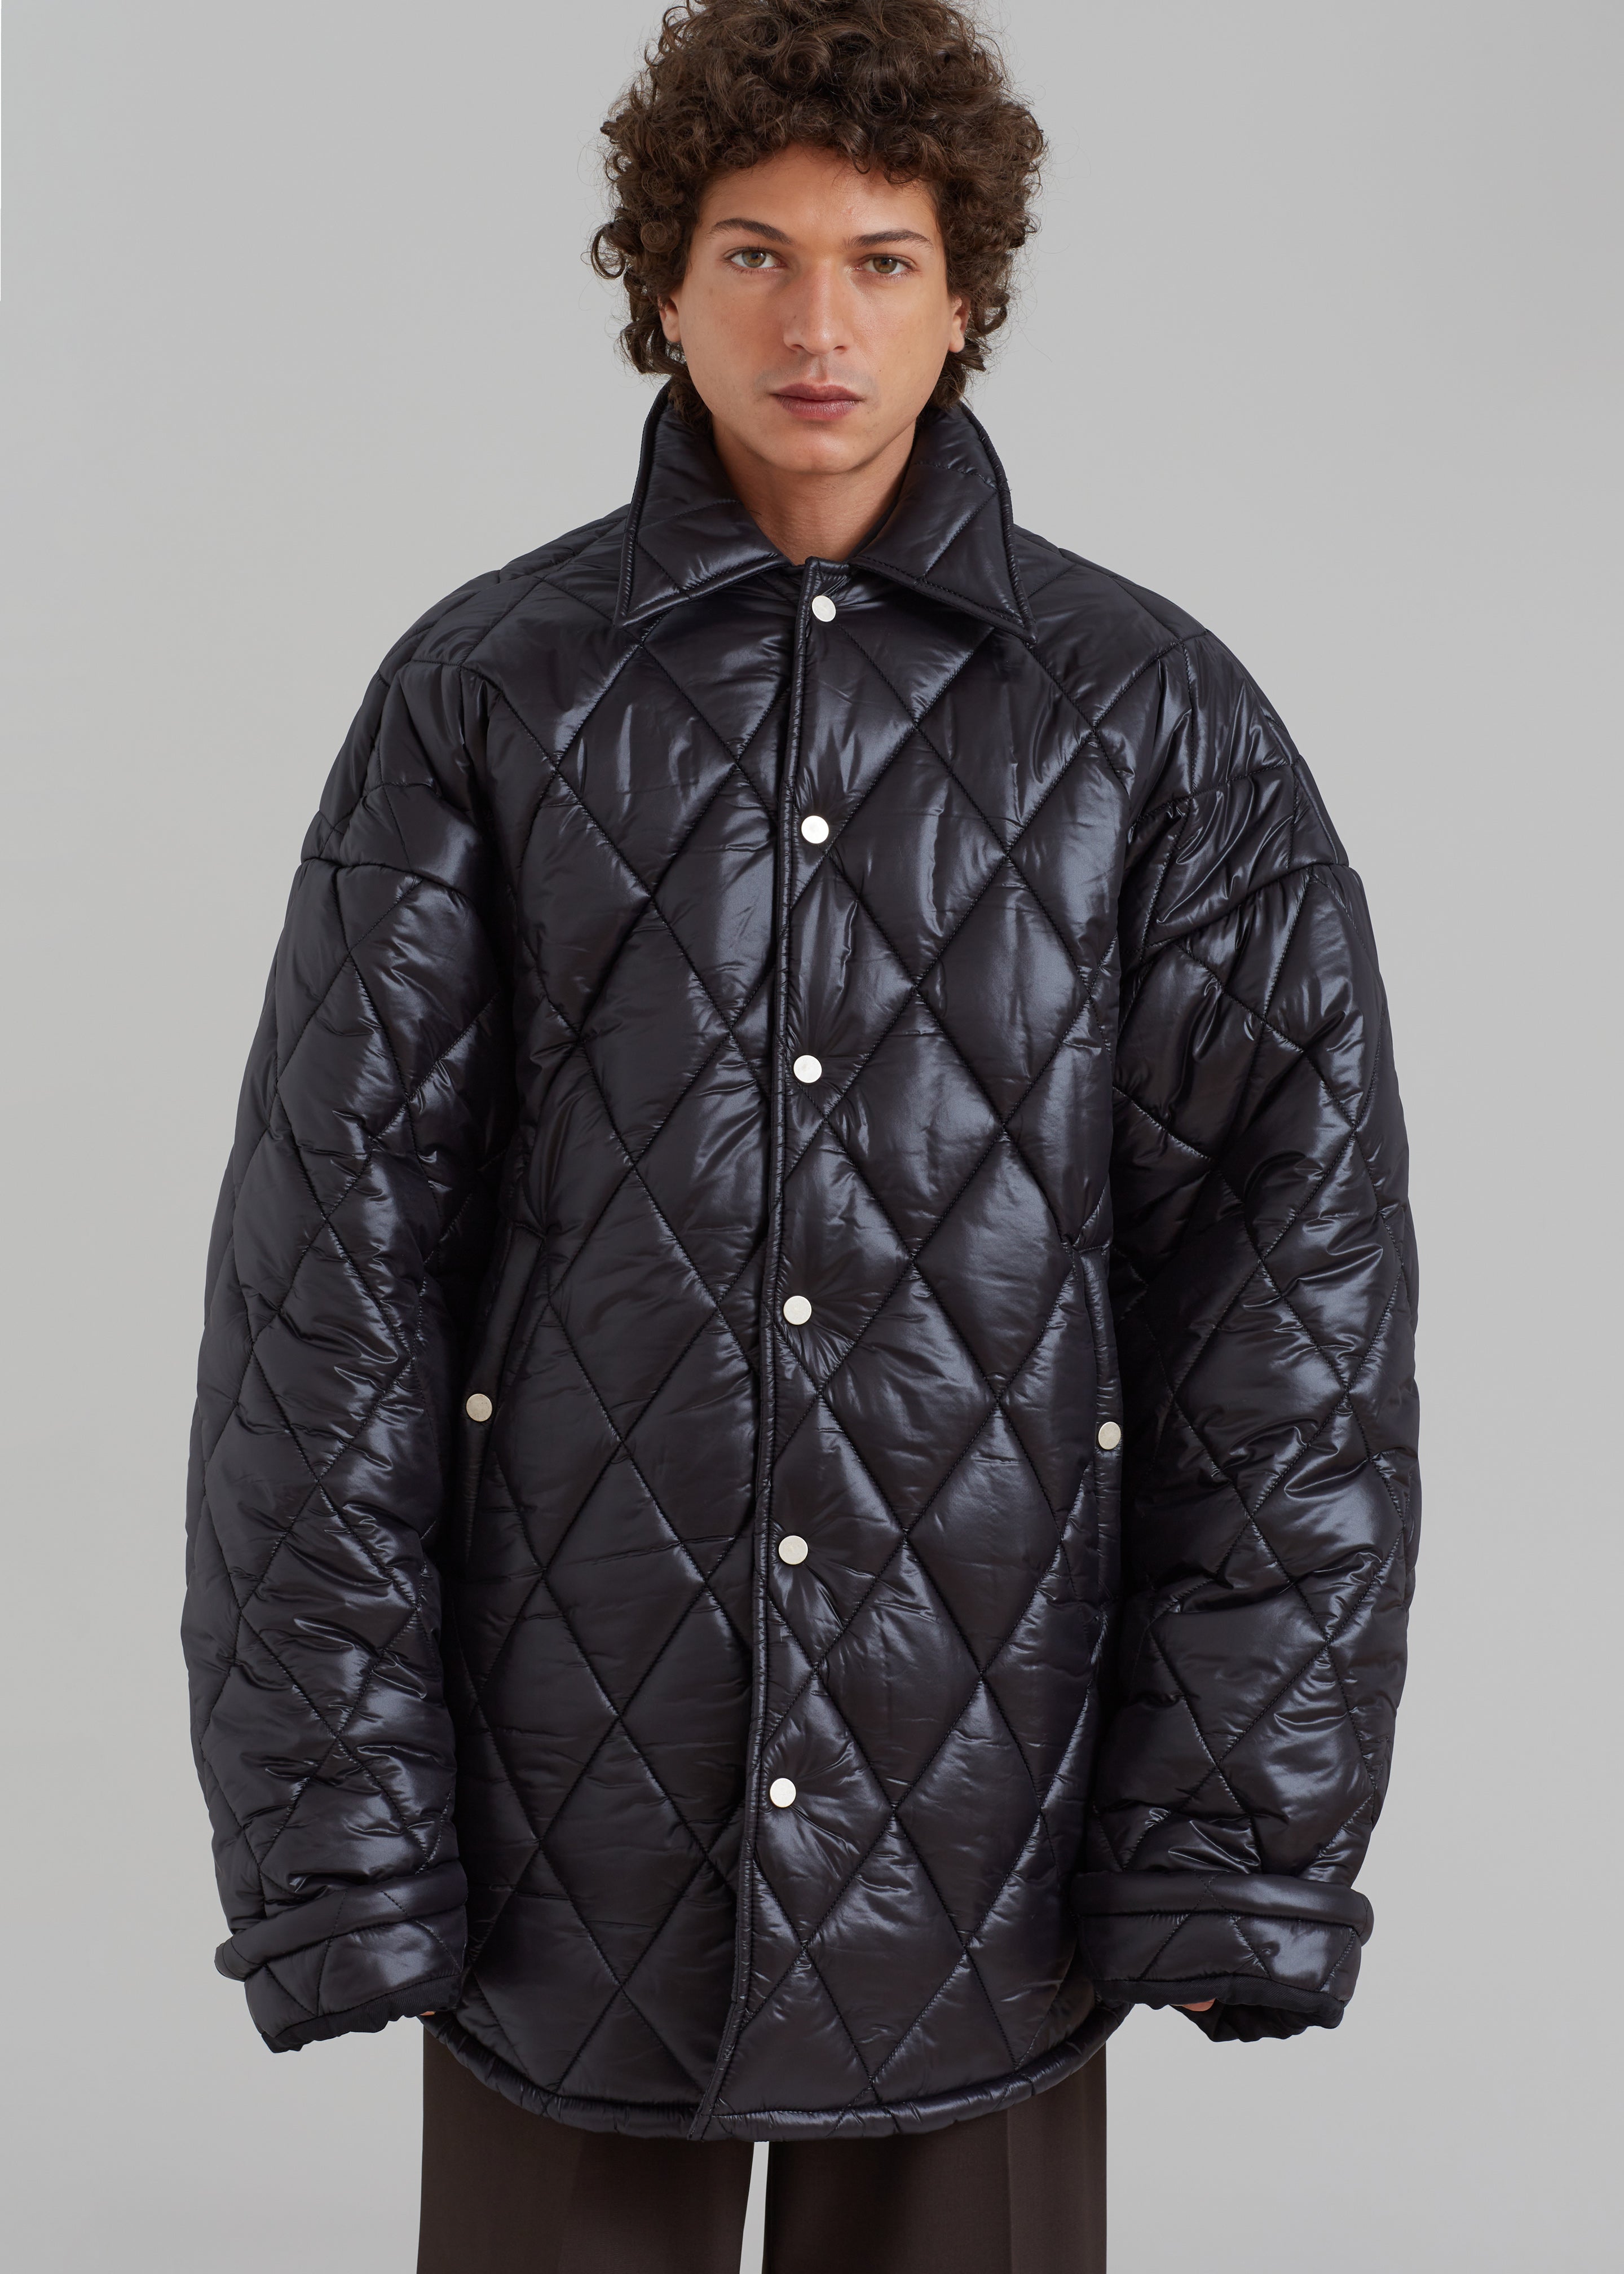 EGONLab Snow Quilted Puffer Jacket - Shiny Black Pl - 7